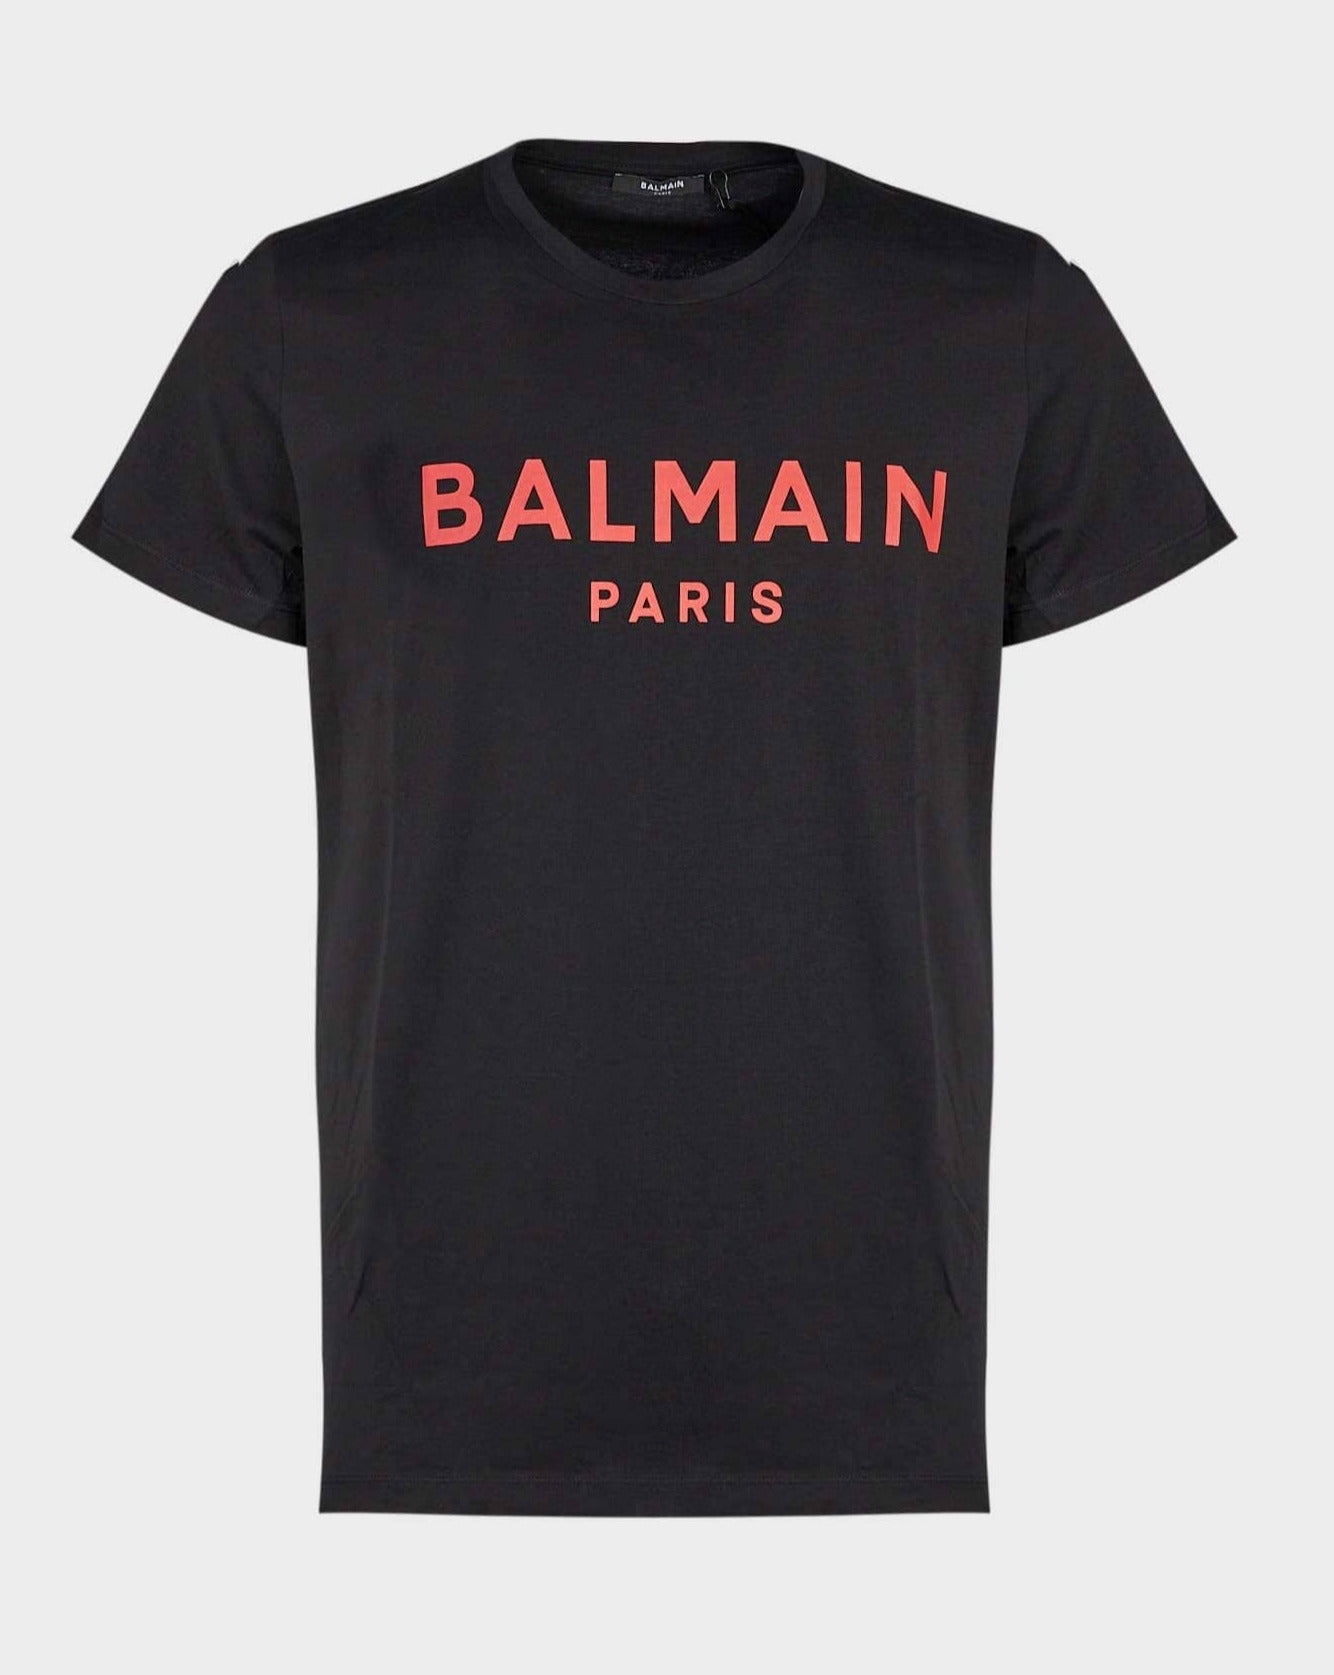 Balmain Shirt 